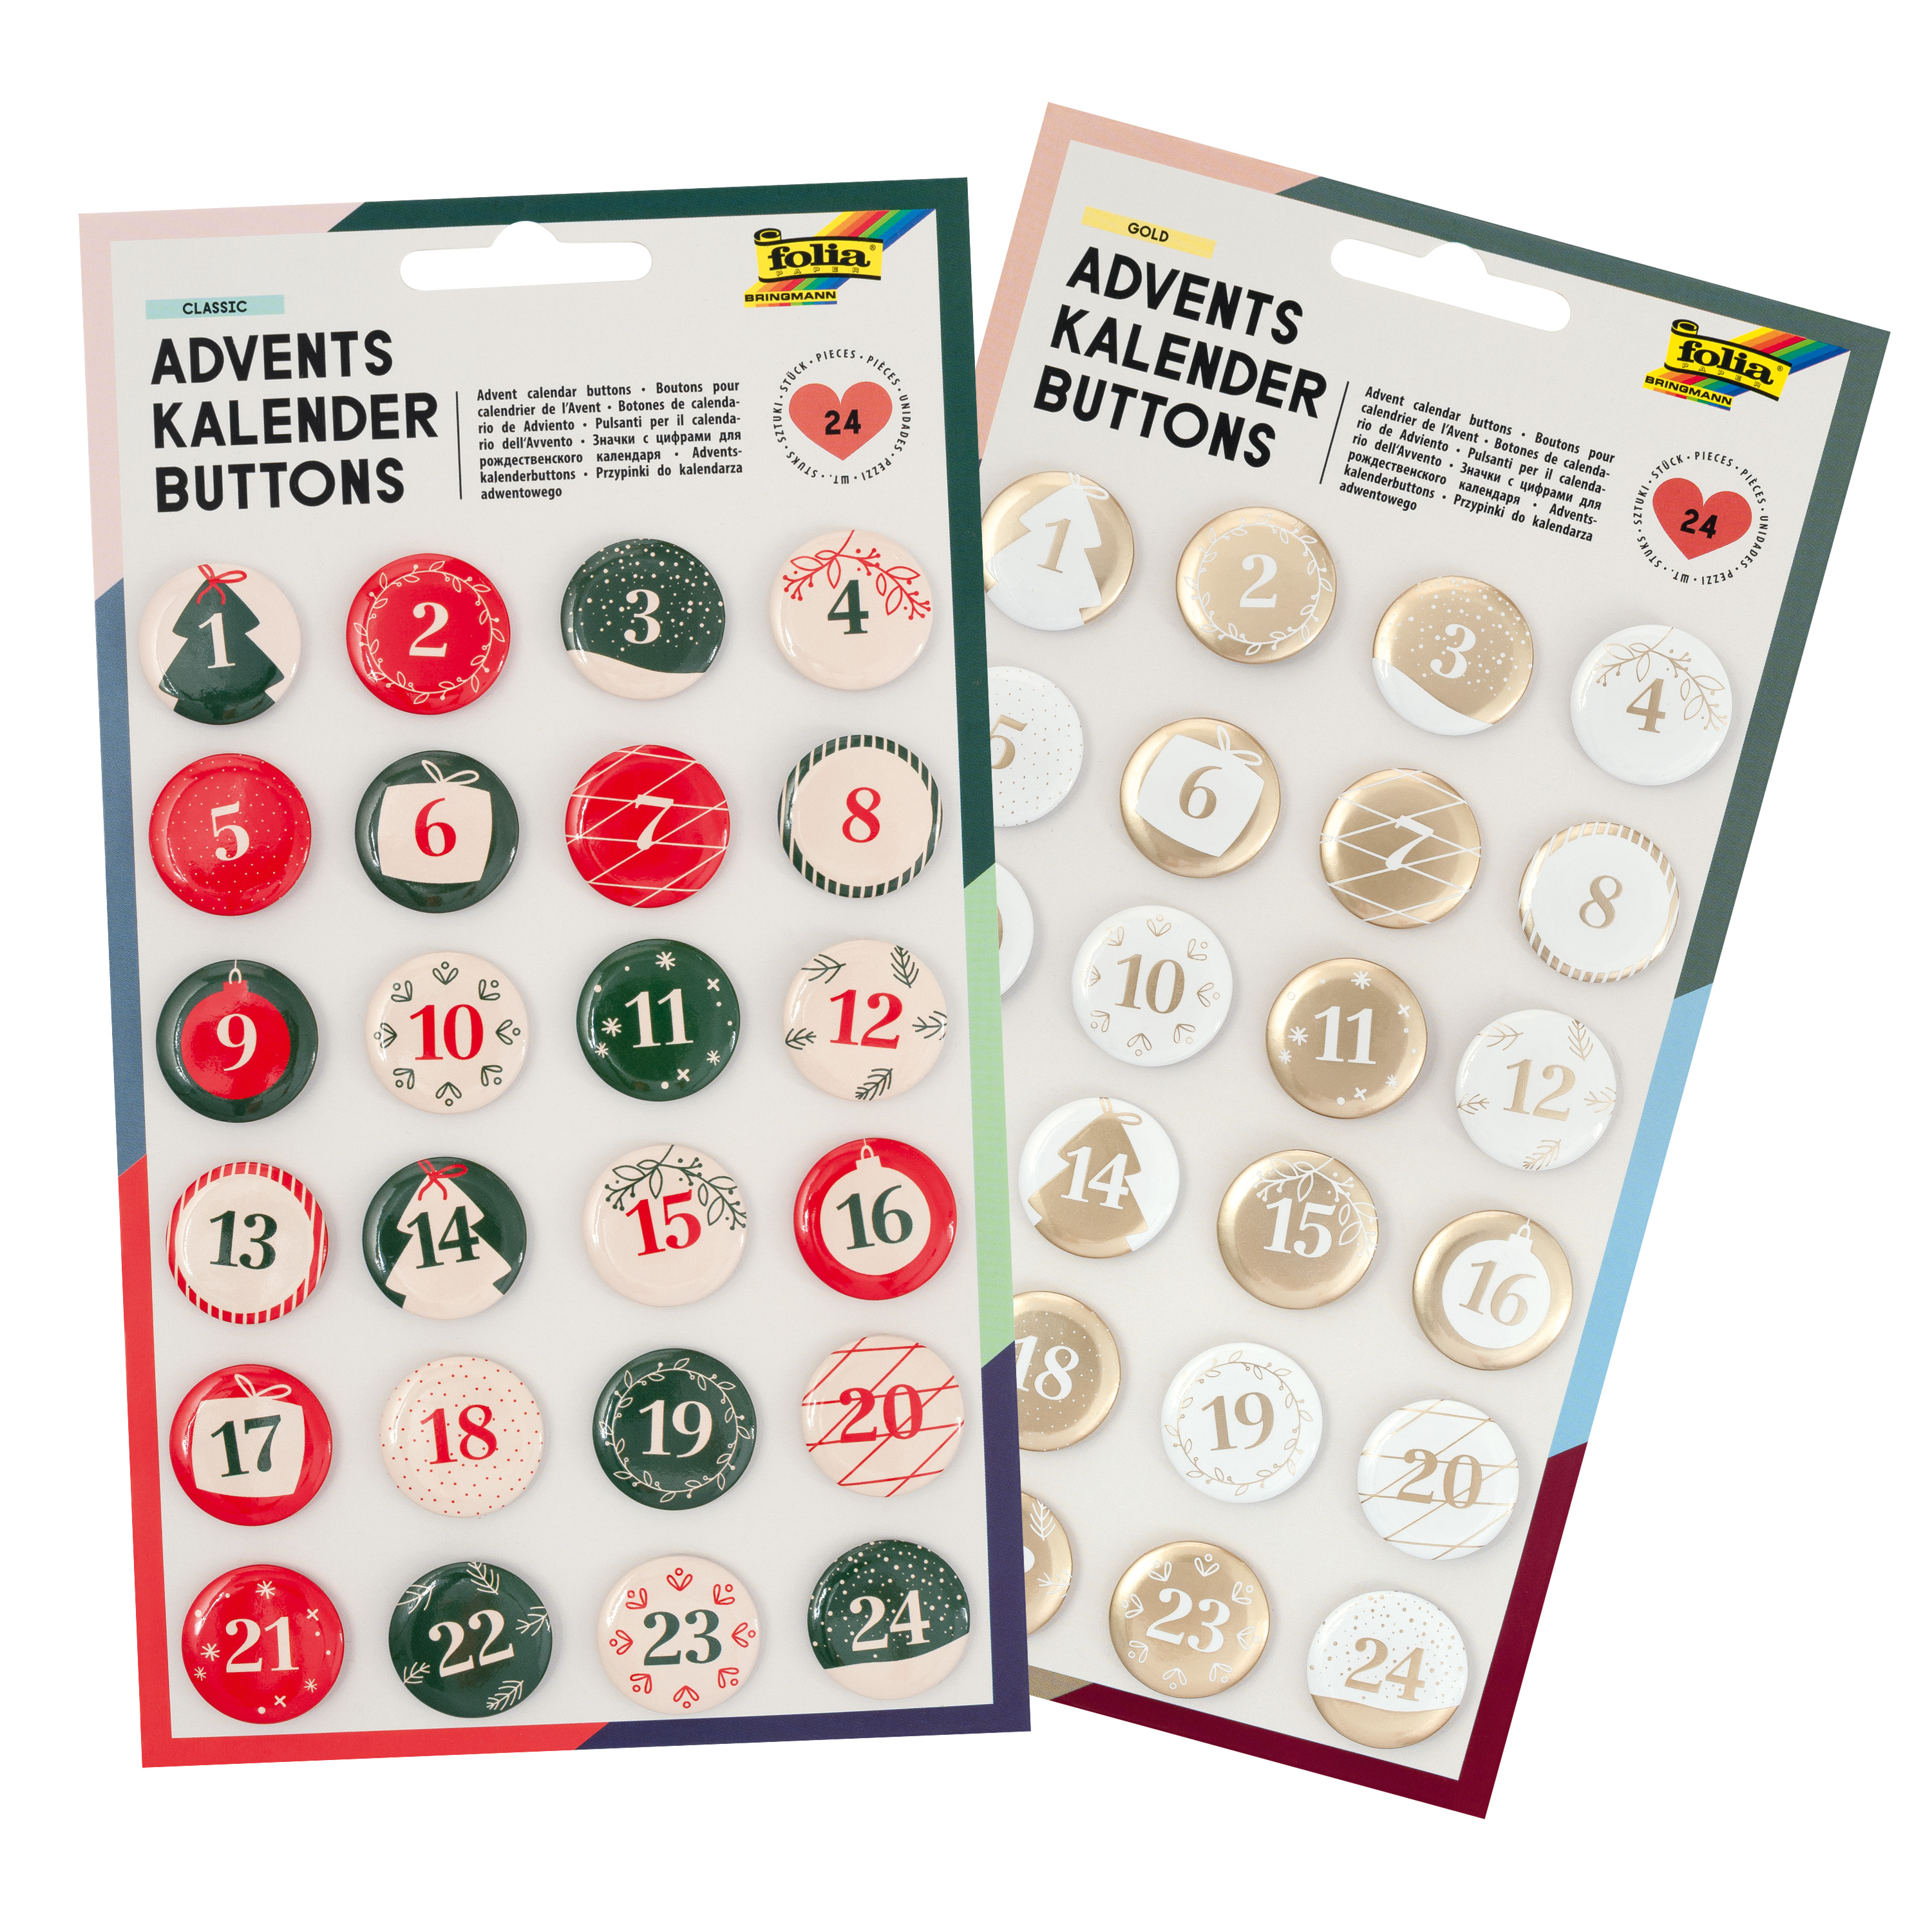 Adventskalender Buttons, 24 Stück, verschiedene Farben